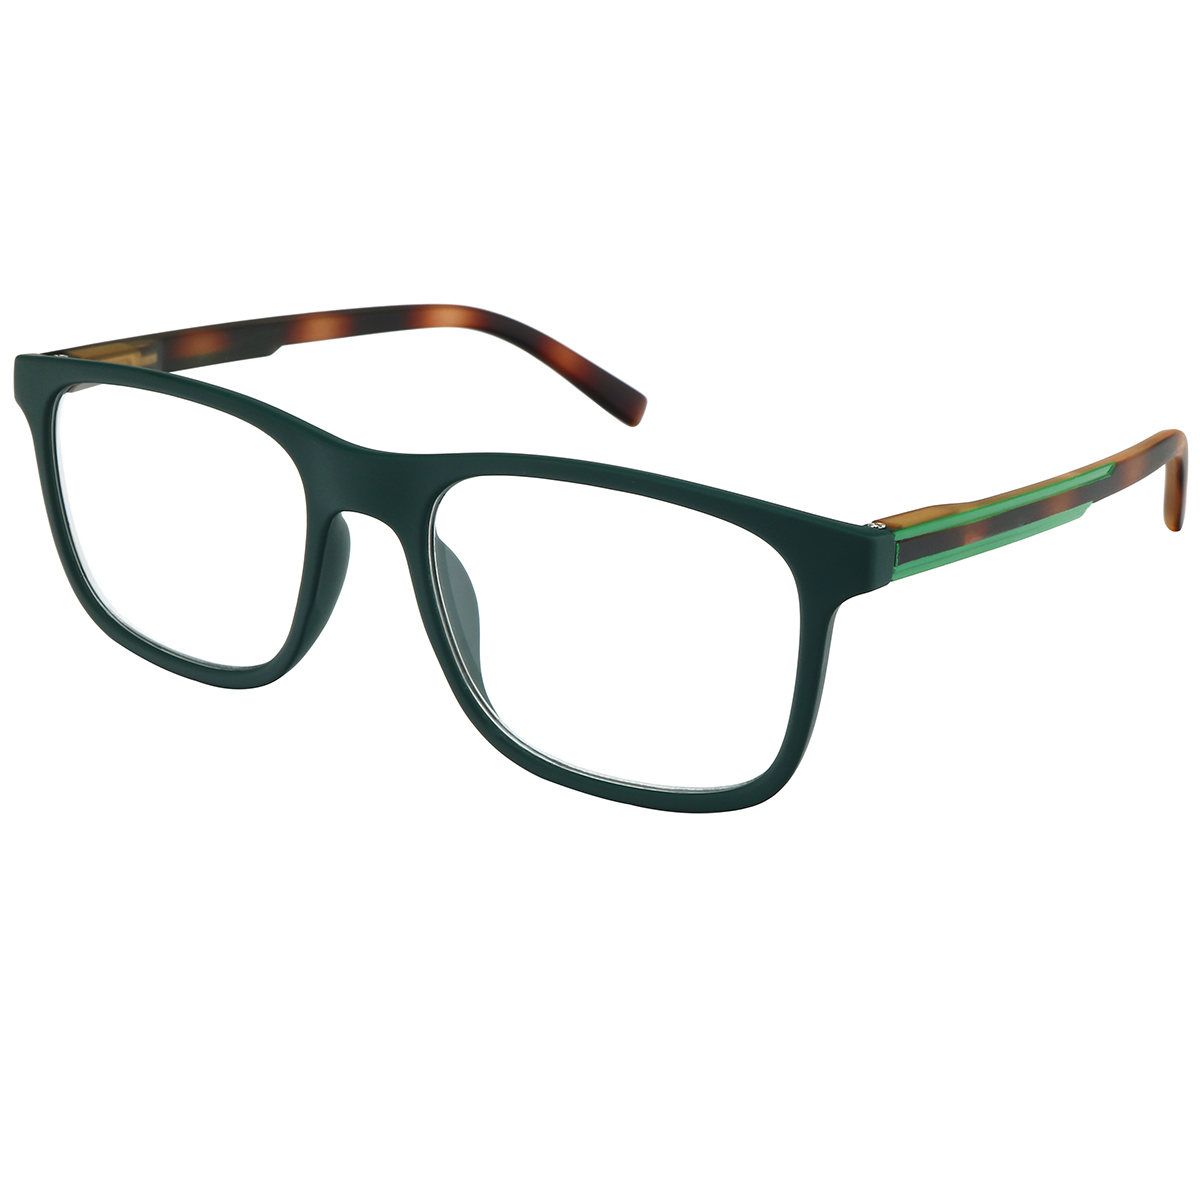 Aetolia - Square Green Reading Glasses for Men